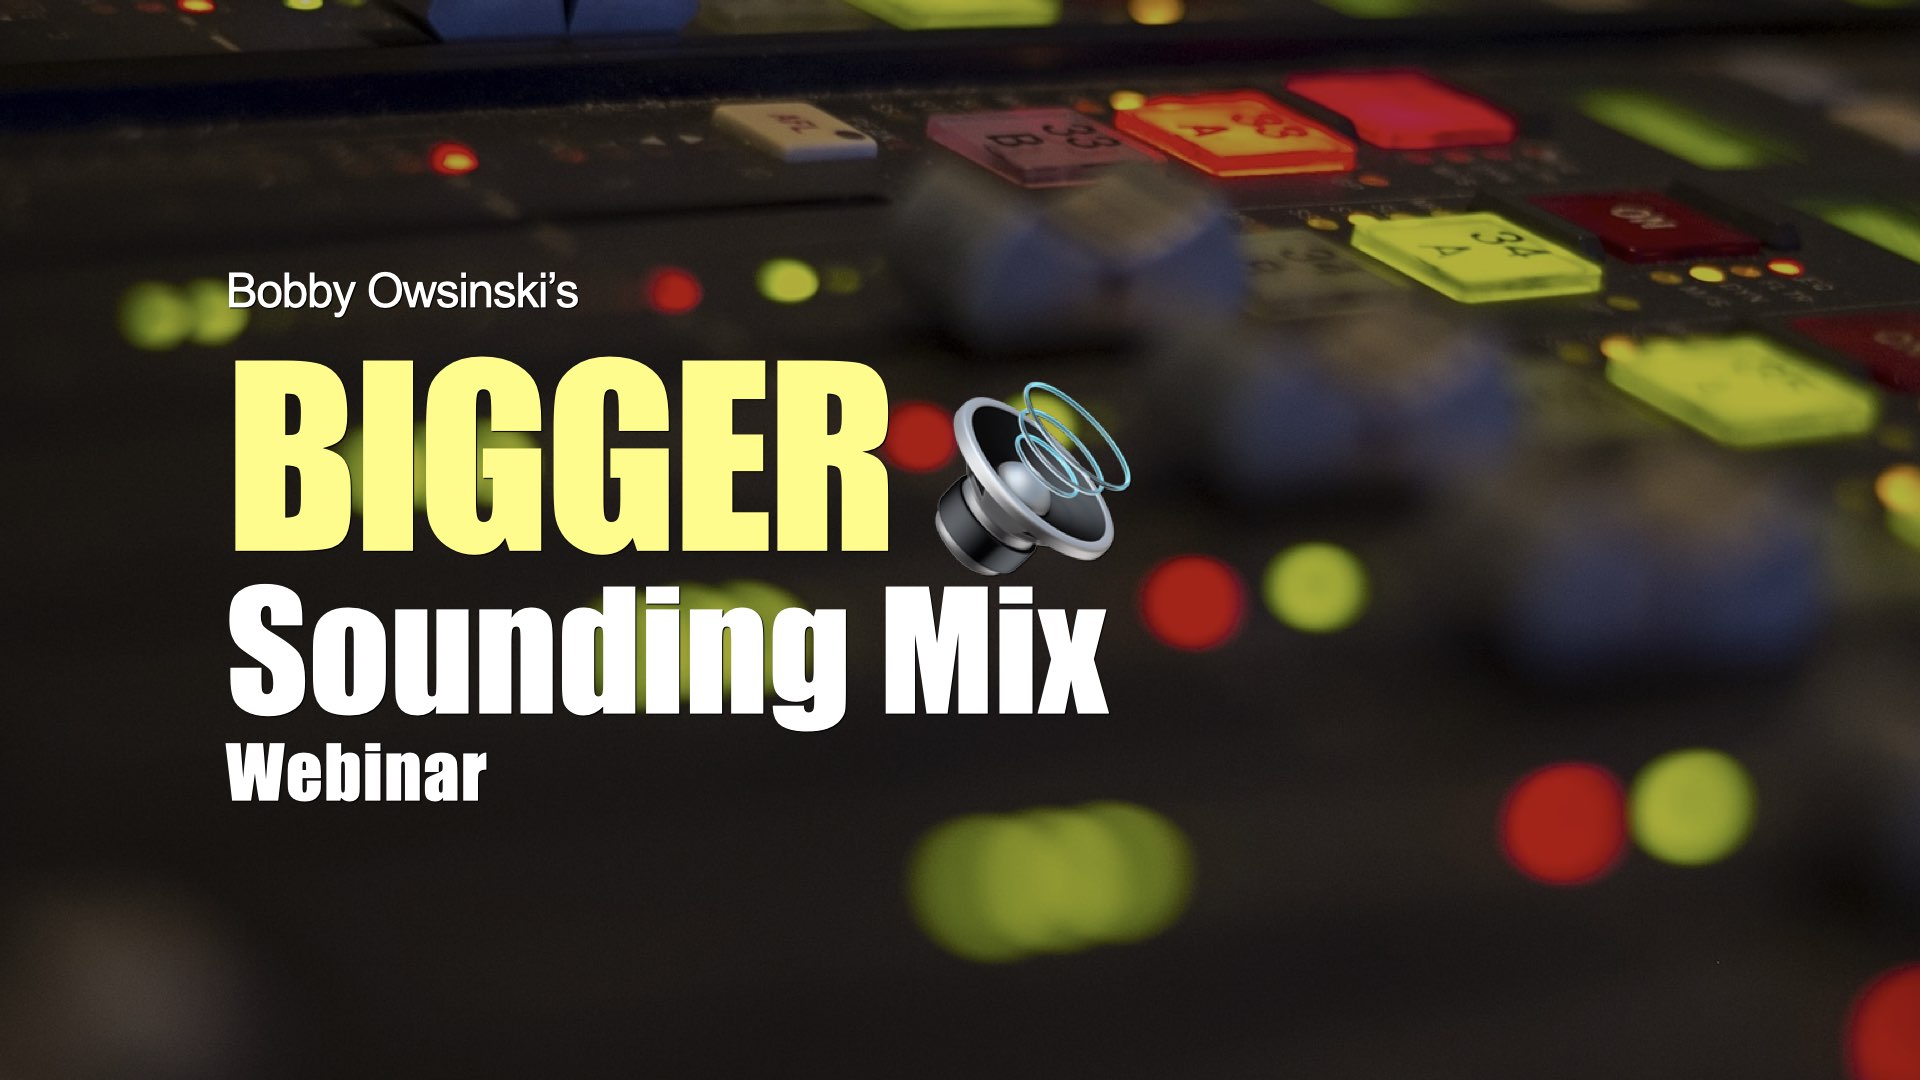 Bigger Sounding Mix Webinar registration